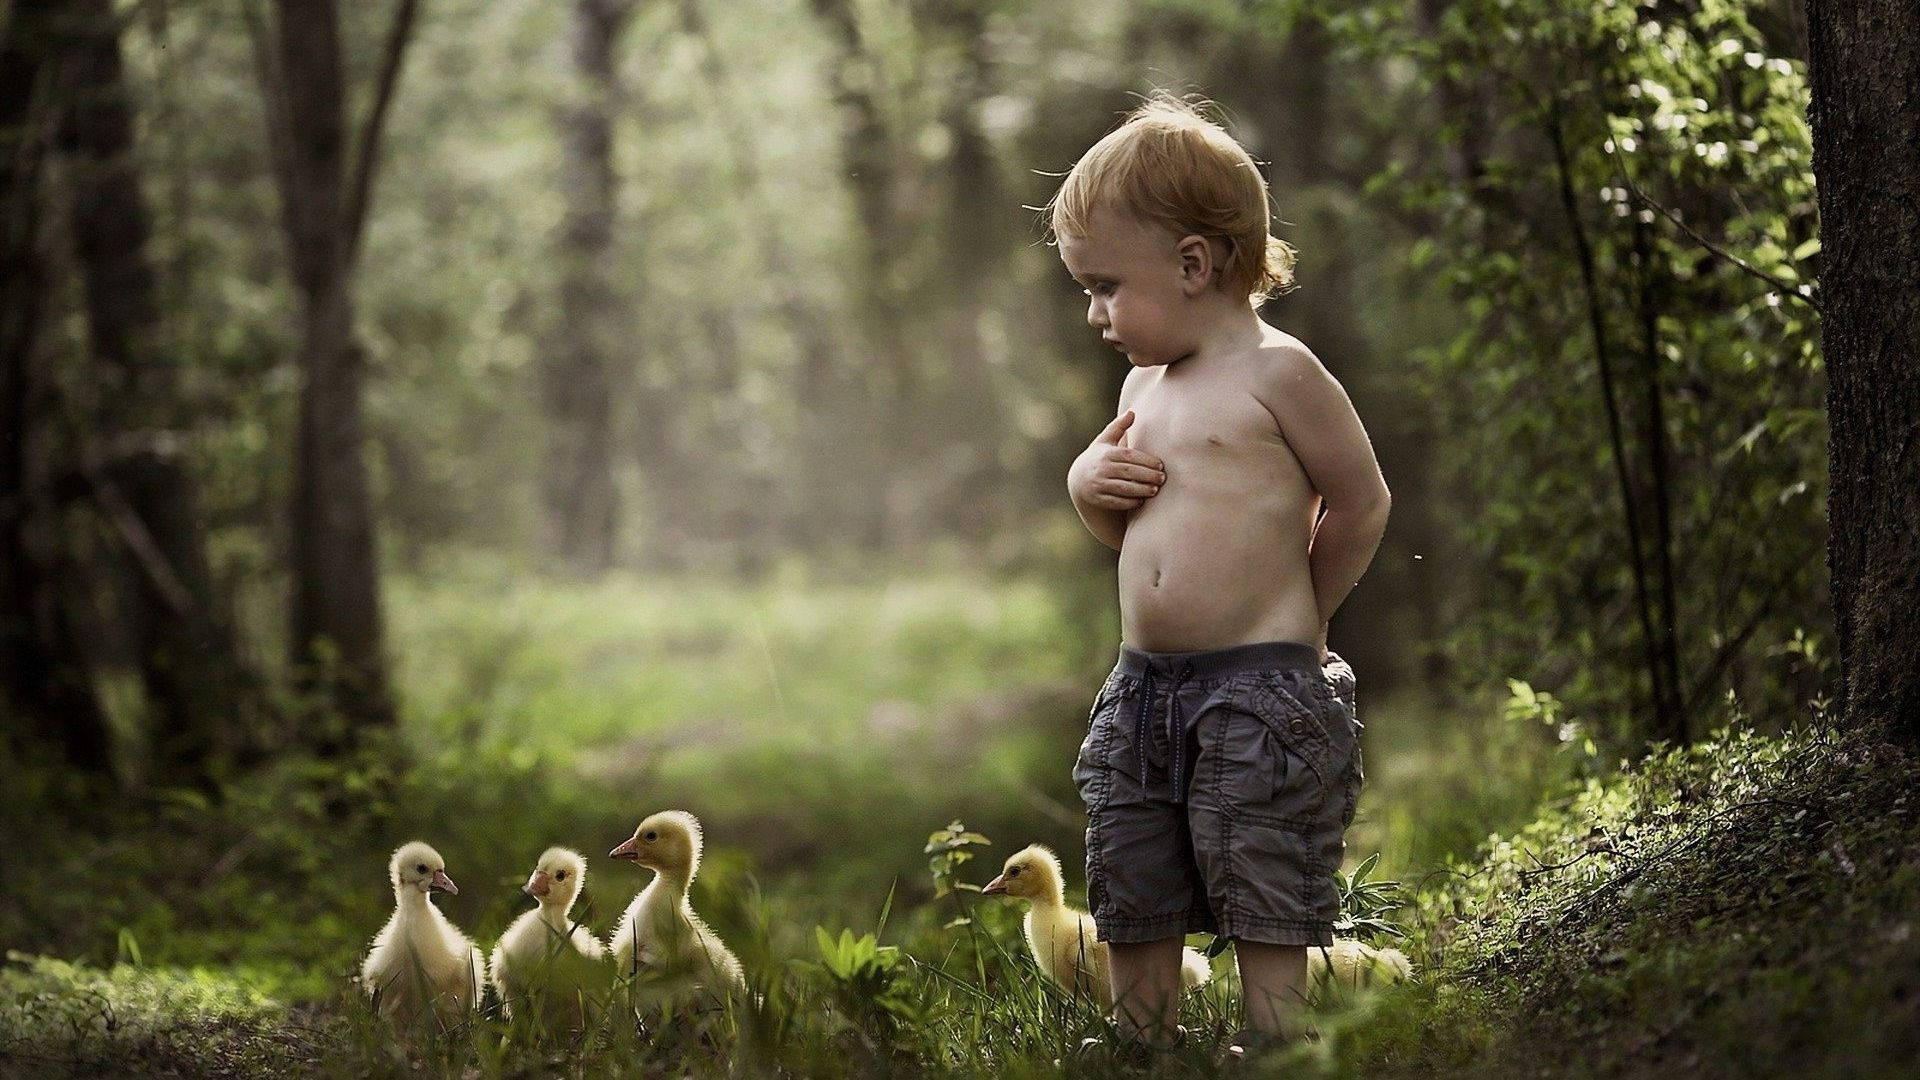 Baby Ducks In Woods Background